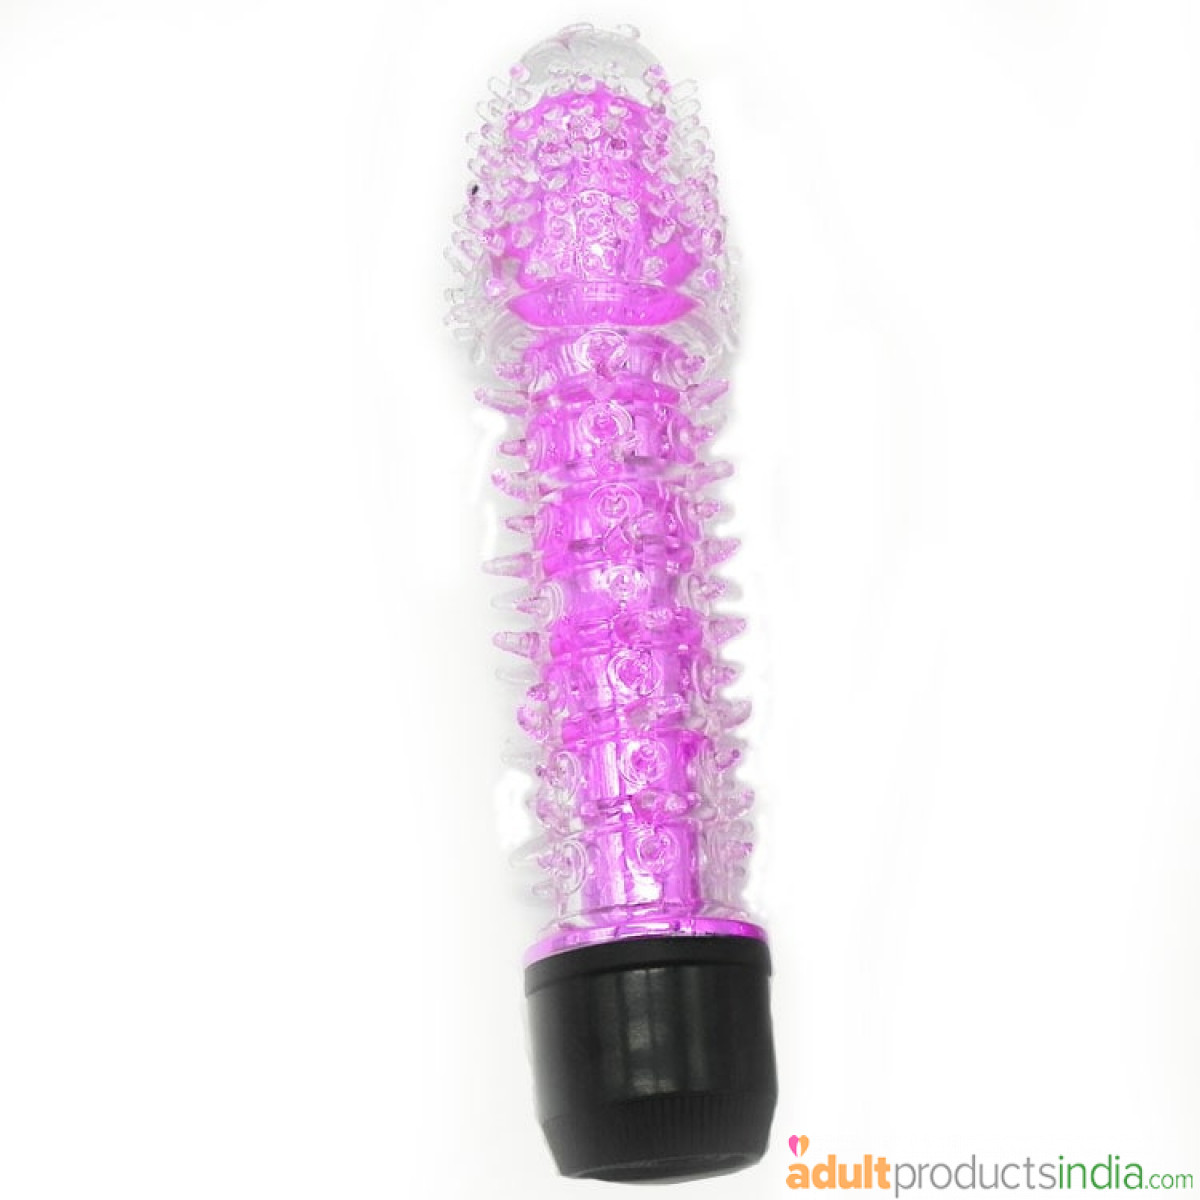 Crystal Vibrator With Darts - Pink